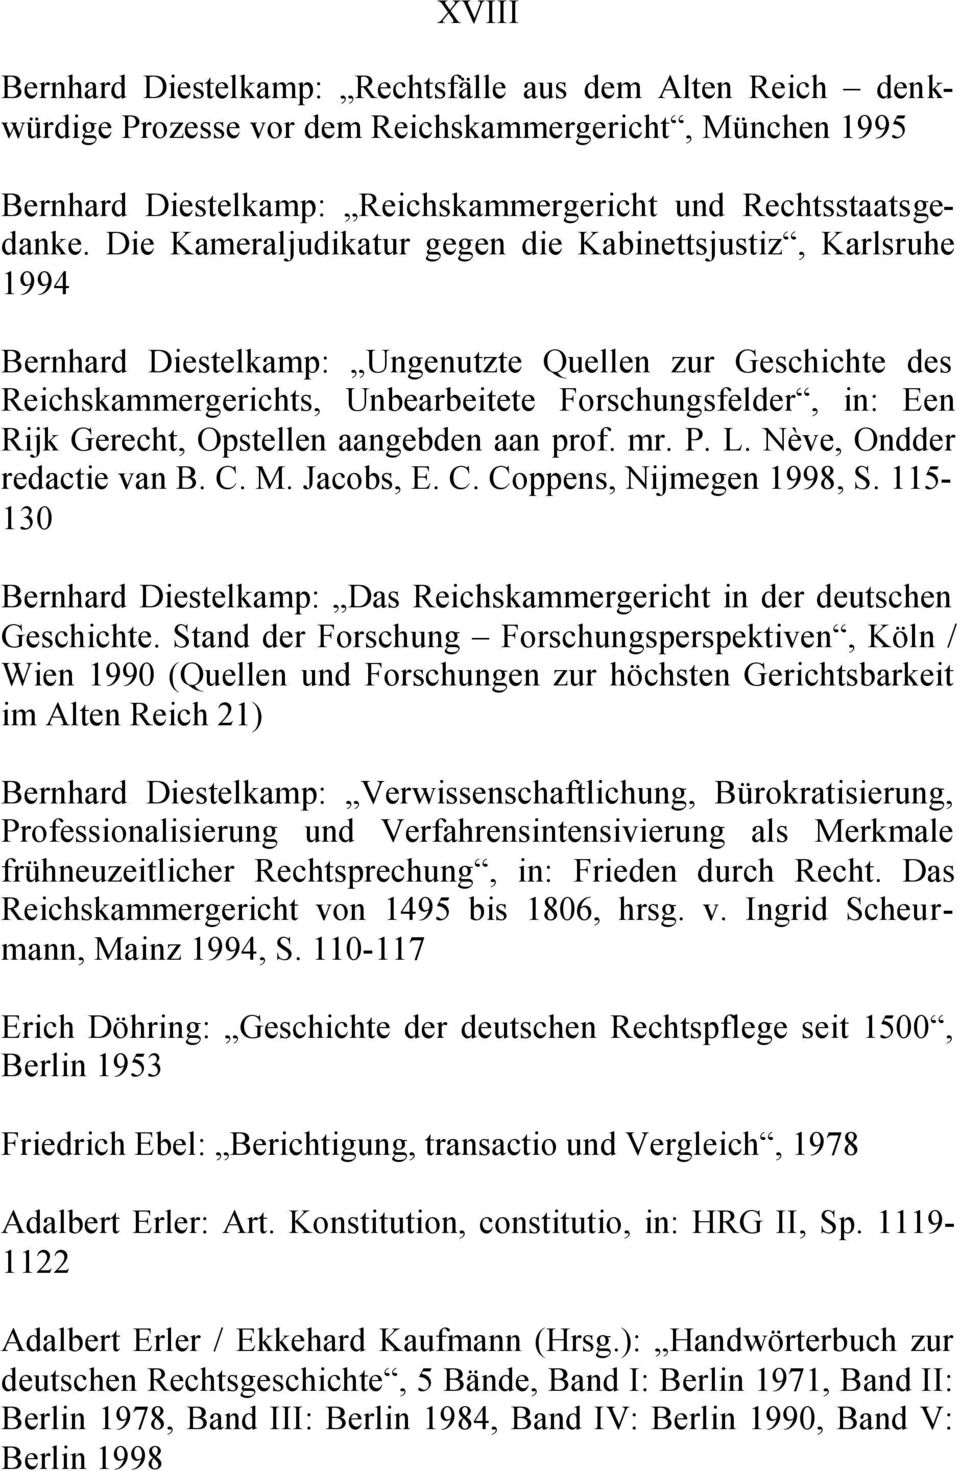 Opstellen aangebden aan prof. mr. P. L. Nève, Ondder redactie van B. C. M. Jacobs, E. C. Coppens, Nijmegen 1998, S. 115-130 Bernhard Diestelkamp: Das Reichskammergericht in der deutschen Geschichte.